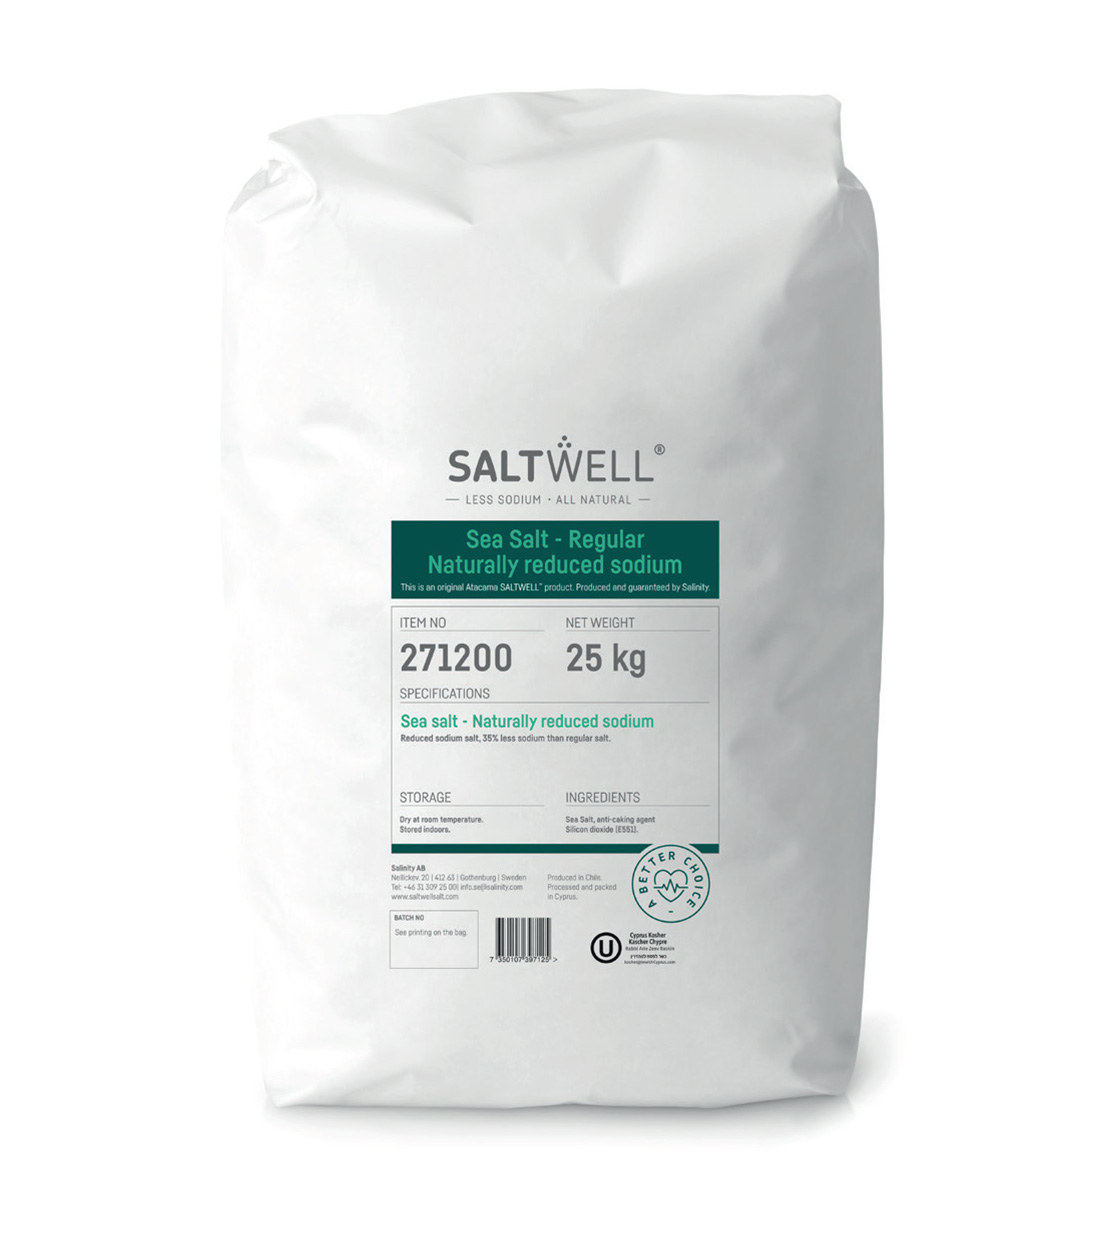 https://www.ingredientsnetwork.com/47/product/125/01/47/saltwell-regular-25kg-product-image.jpg